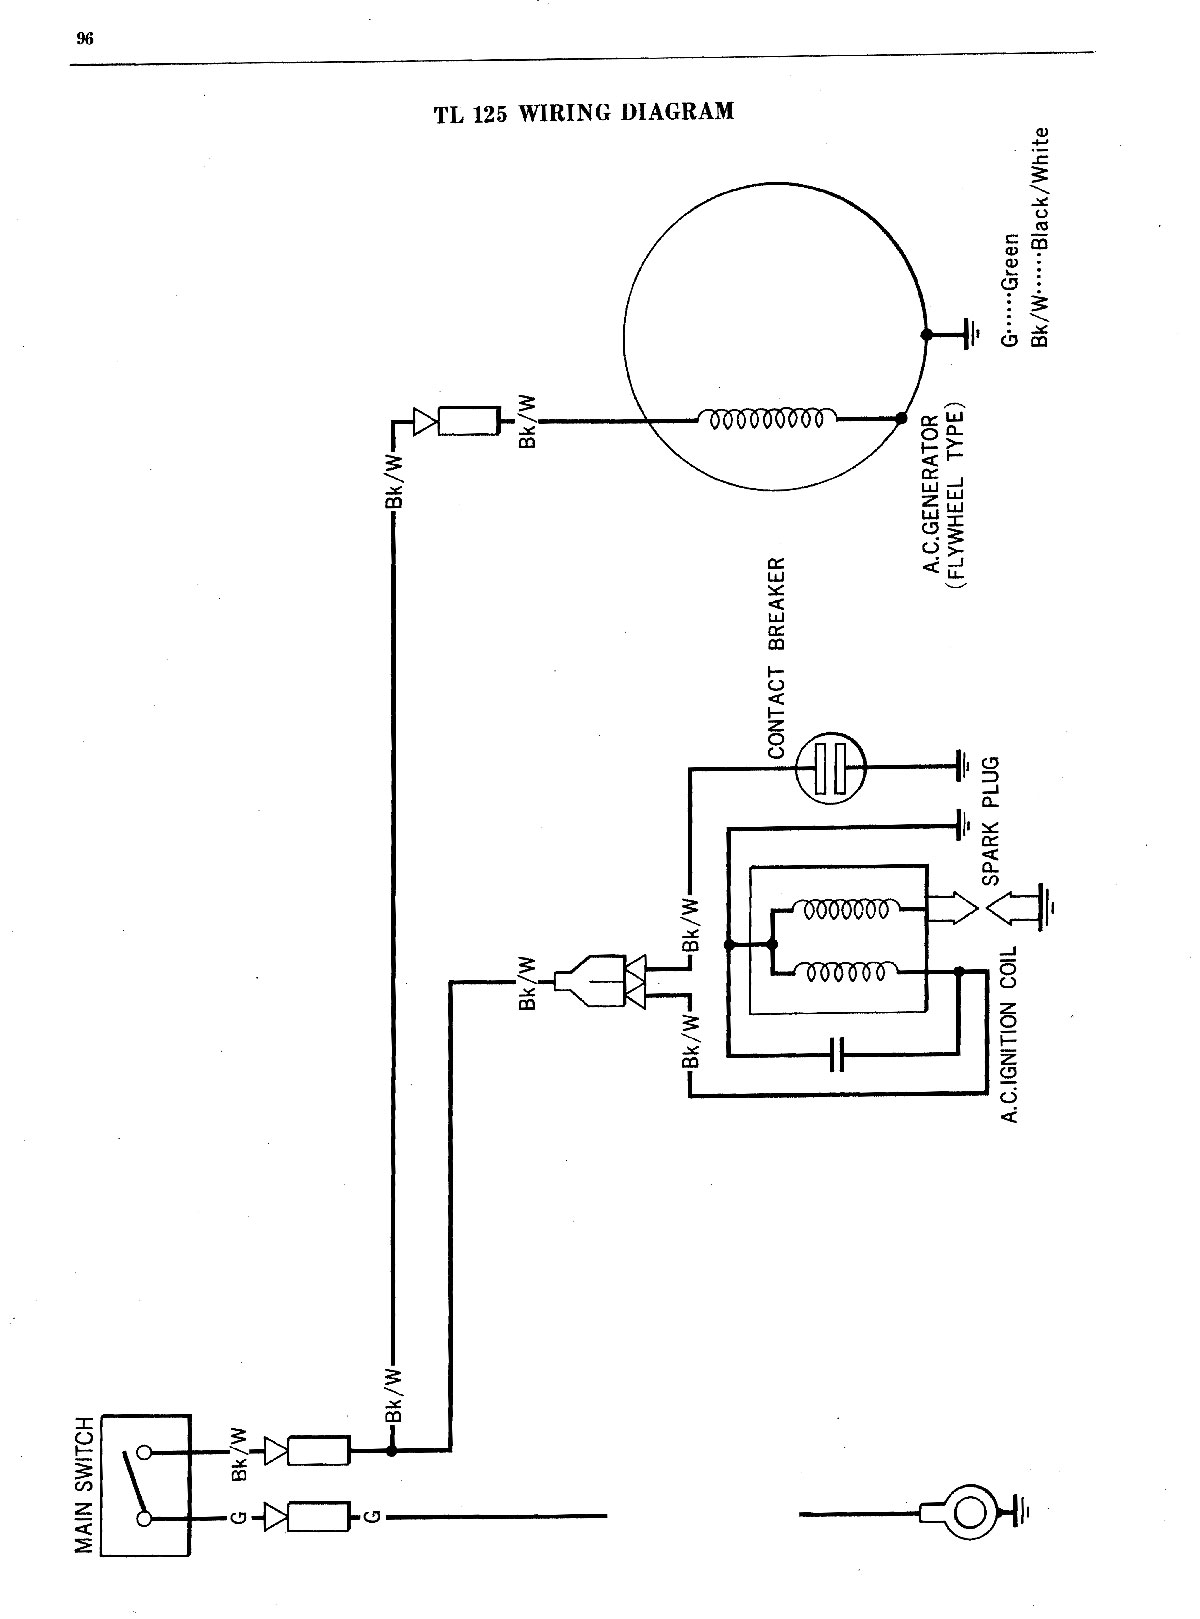 1985 Cr250r diagram honda wiring